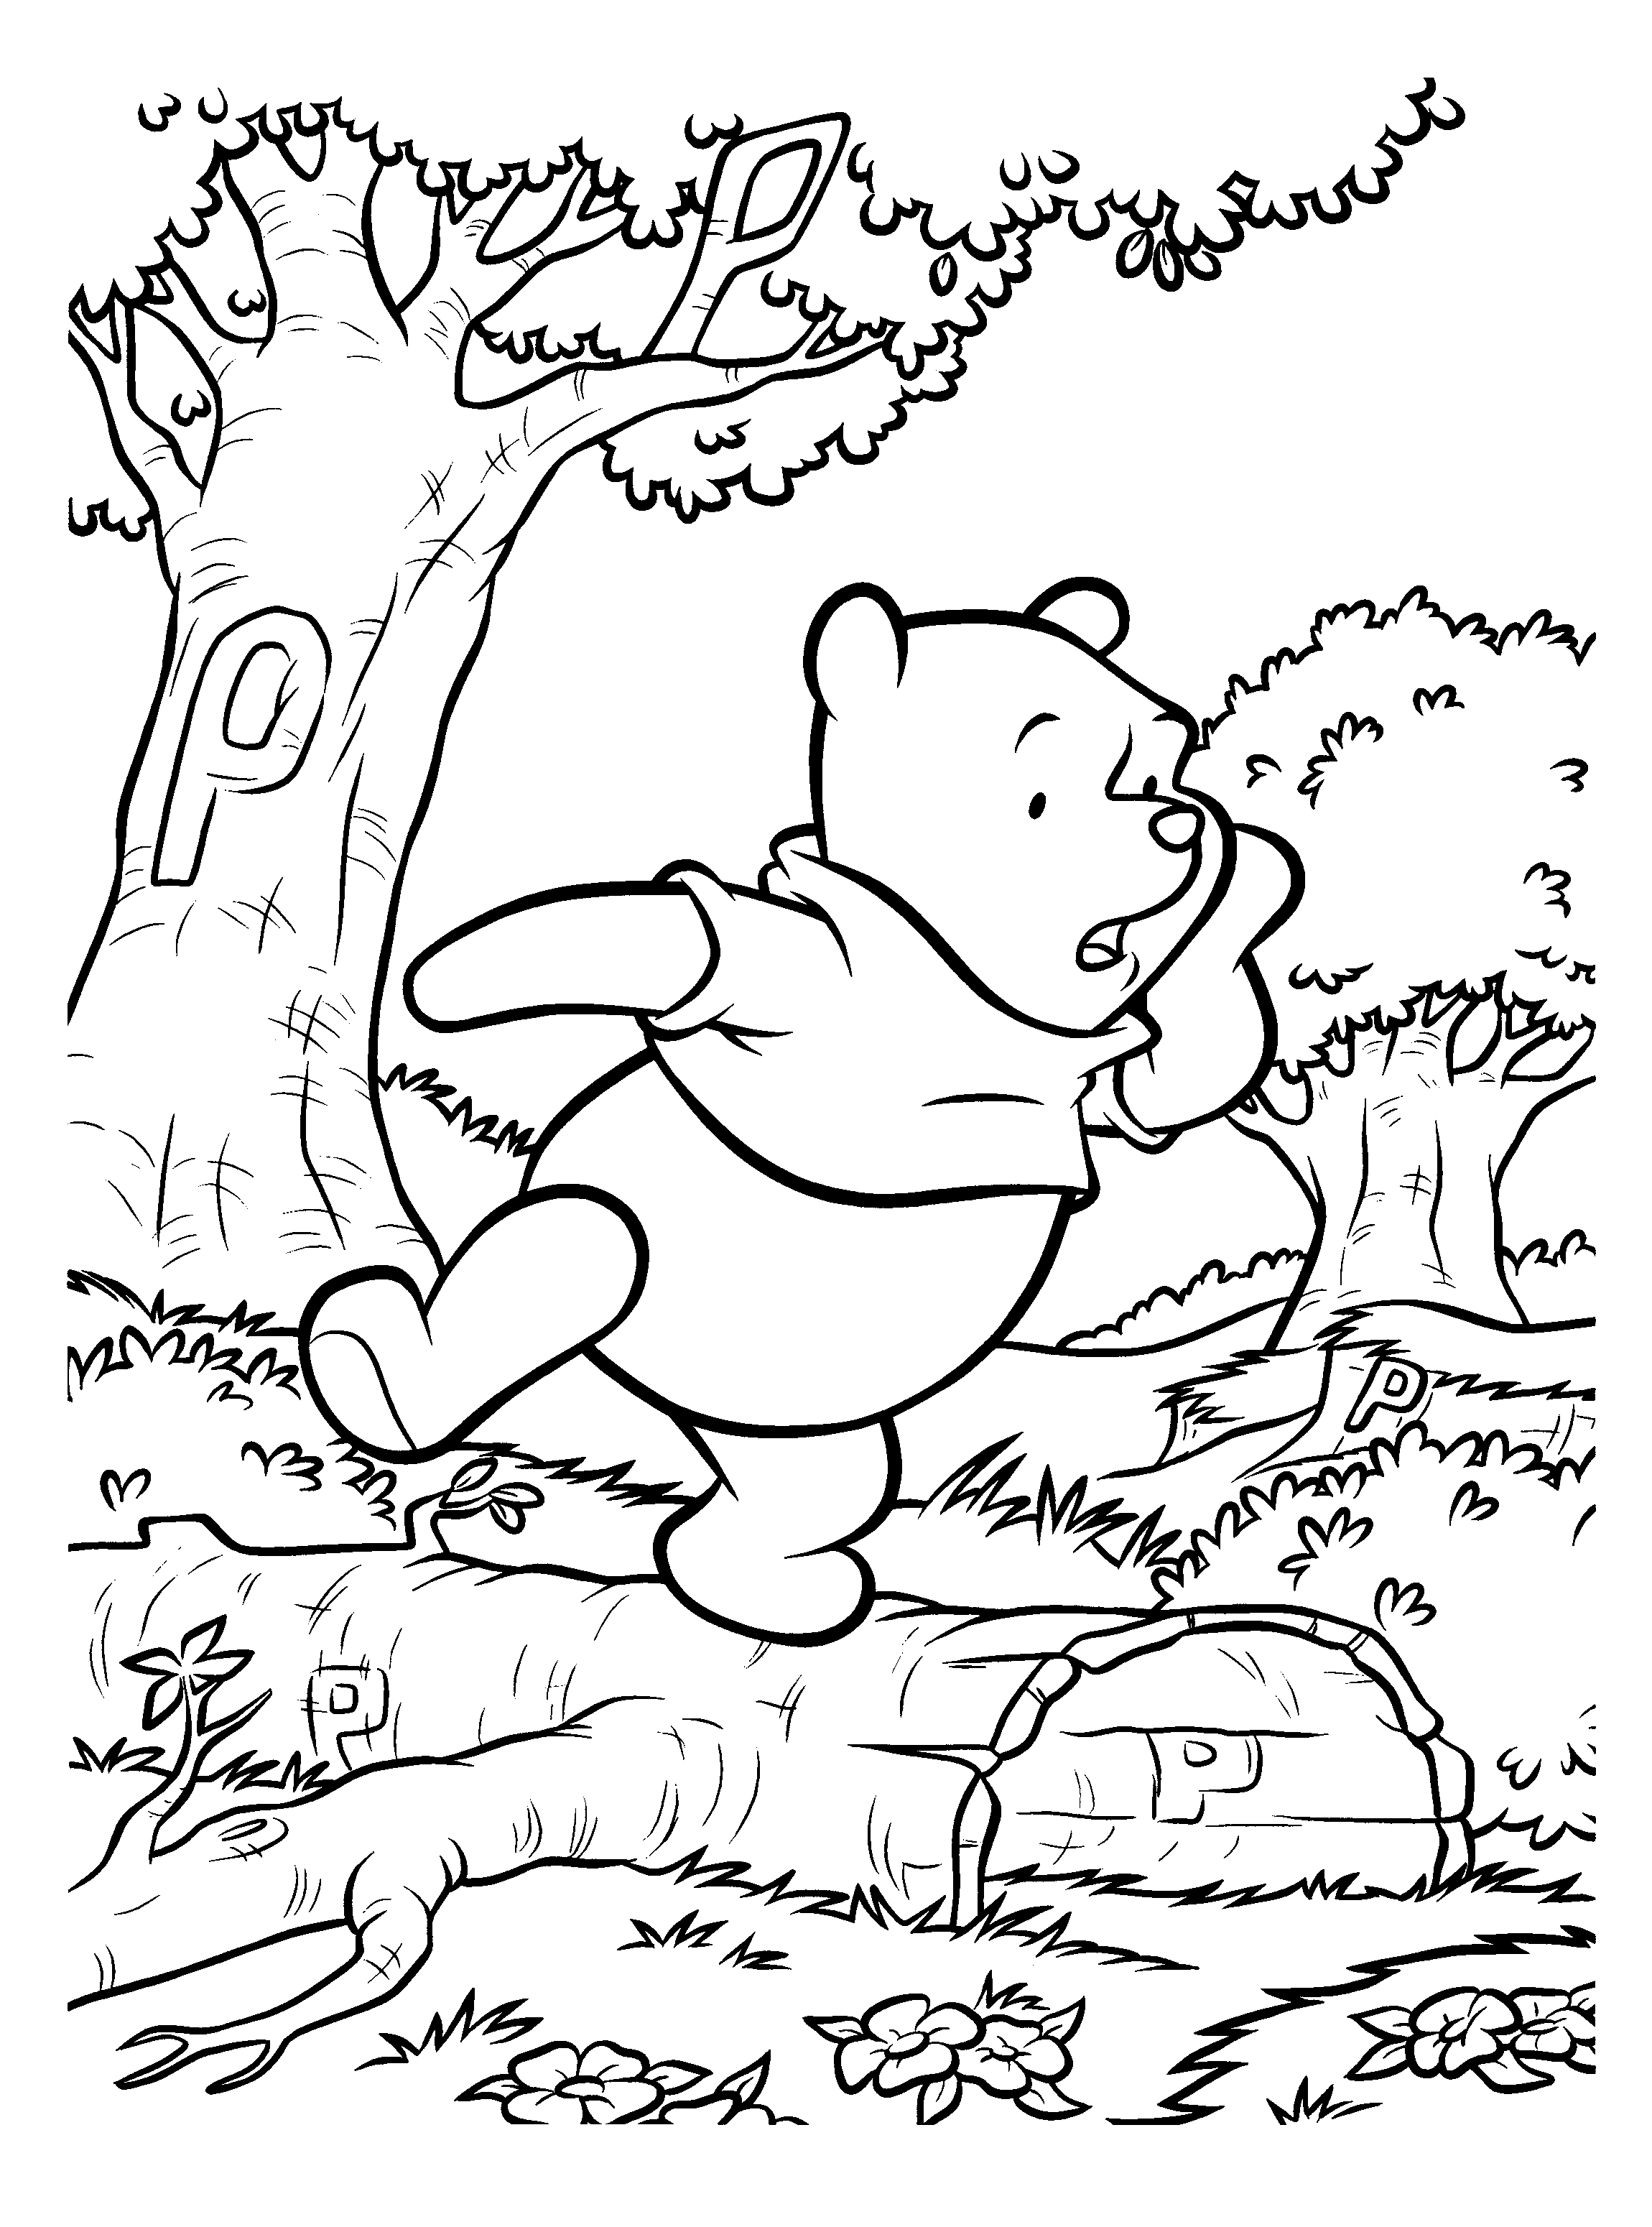 dibujo-para-colorear-winnie-the-pooh-imagen-animada-0091